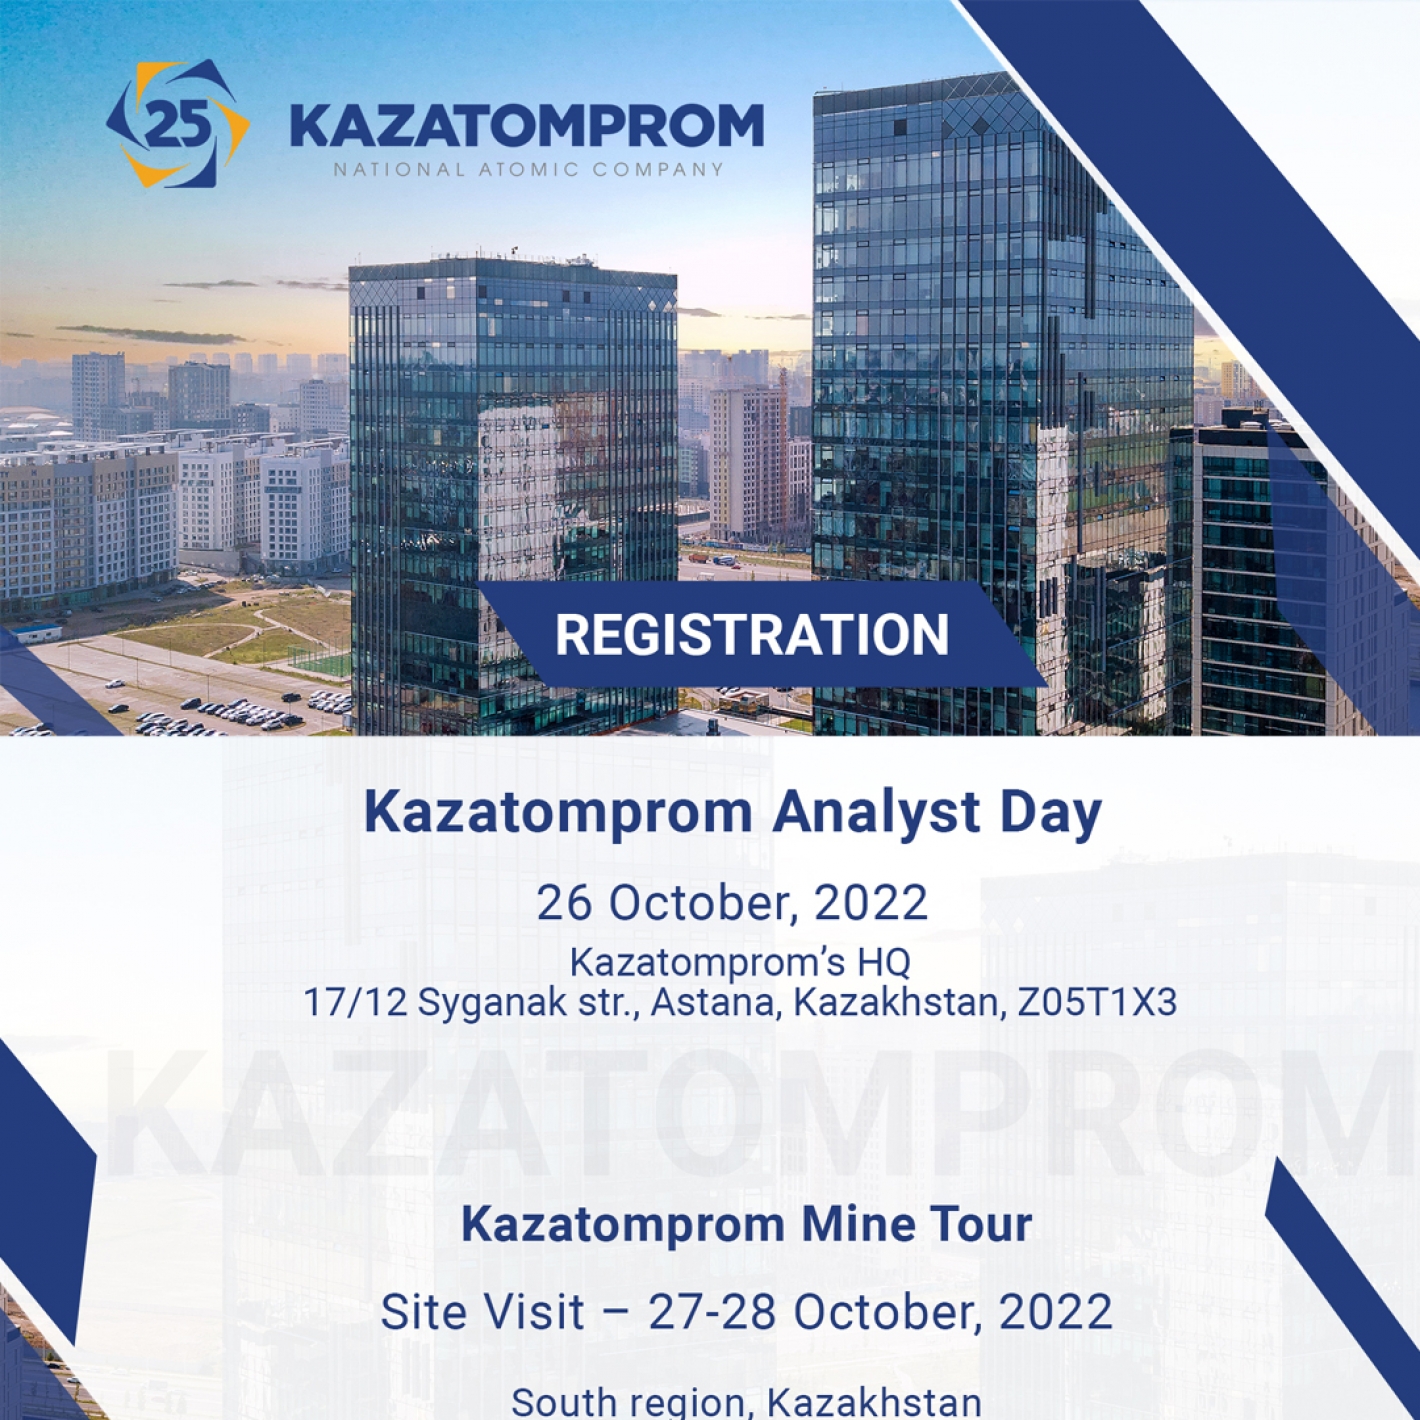 Kazatomprom’s 2022 Analyst Day and Mine Tour